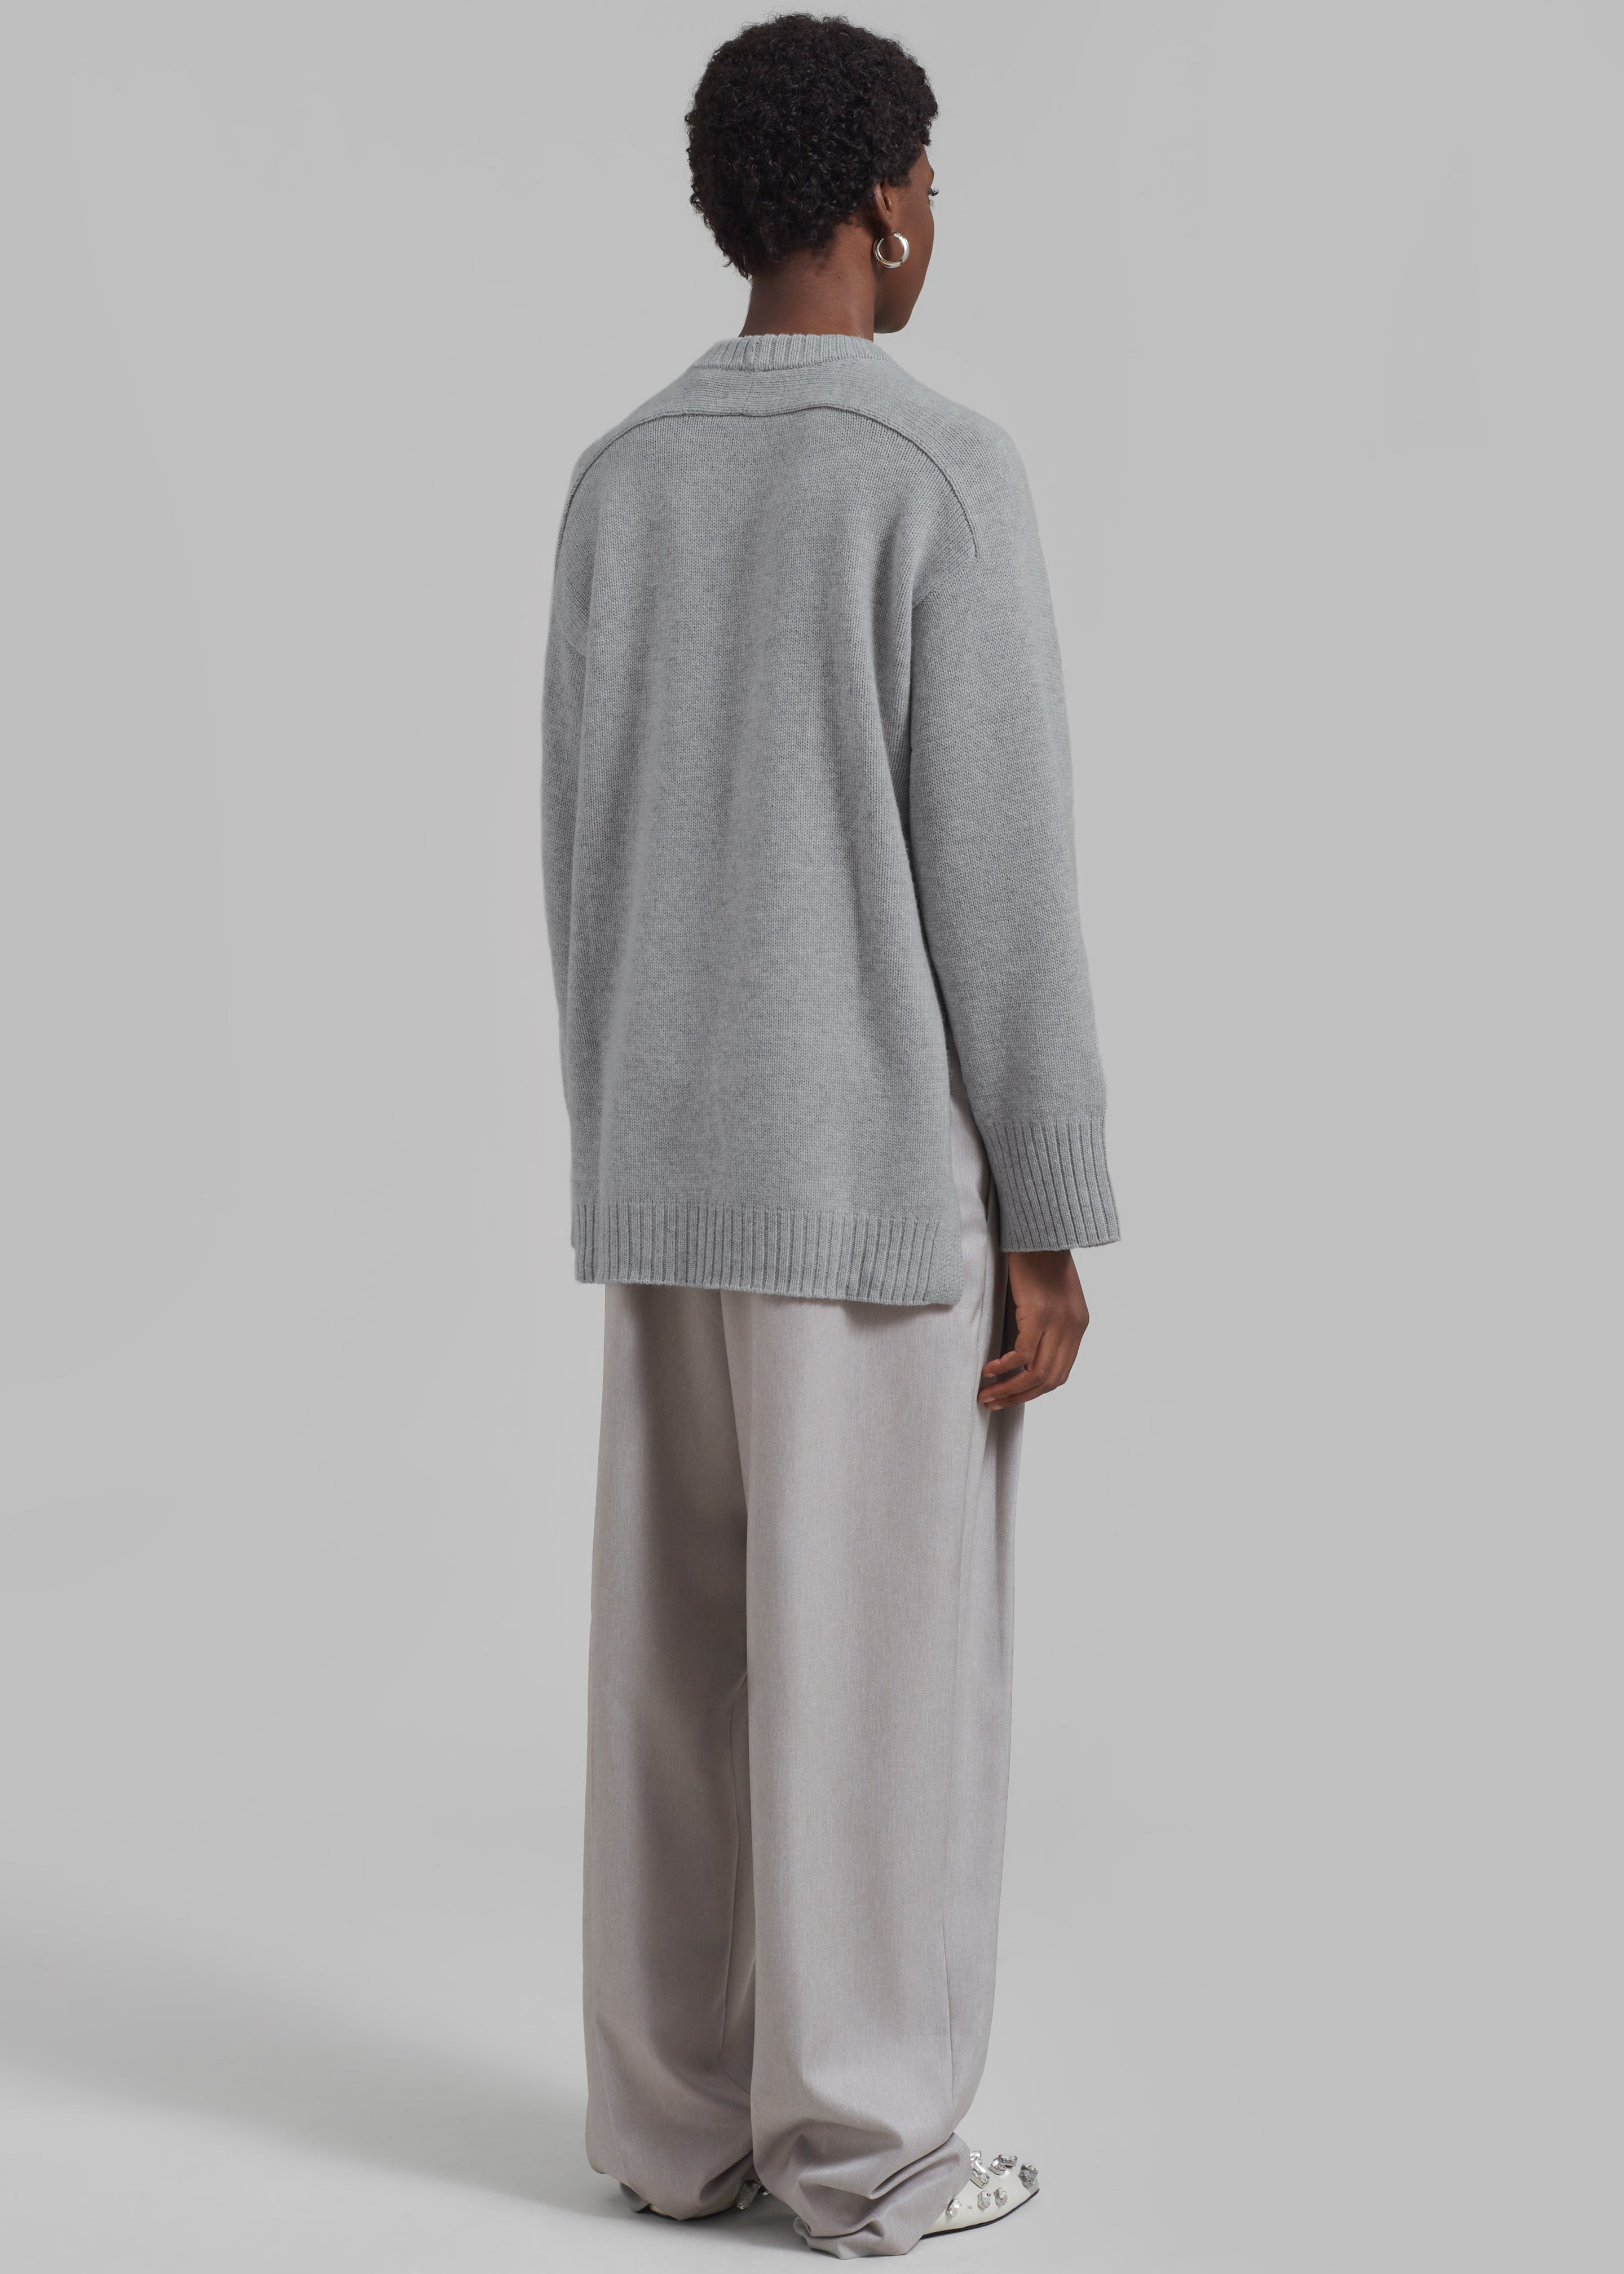 Loulou Studio Safi Sweater - Grey Melange - 8